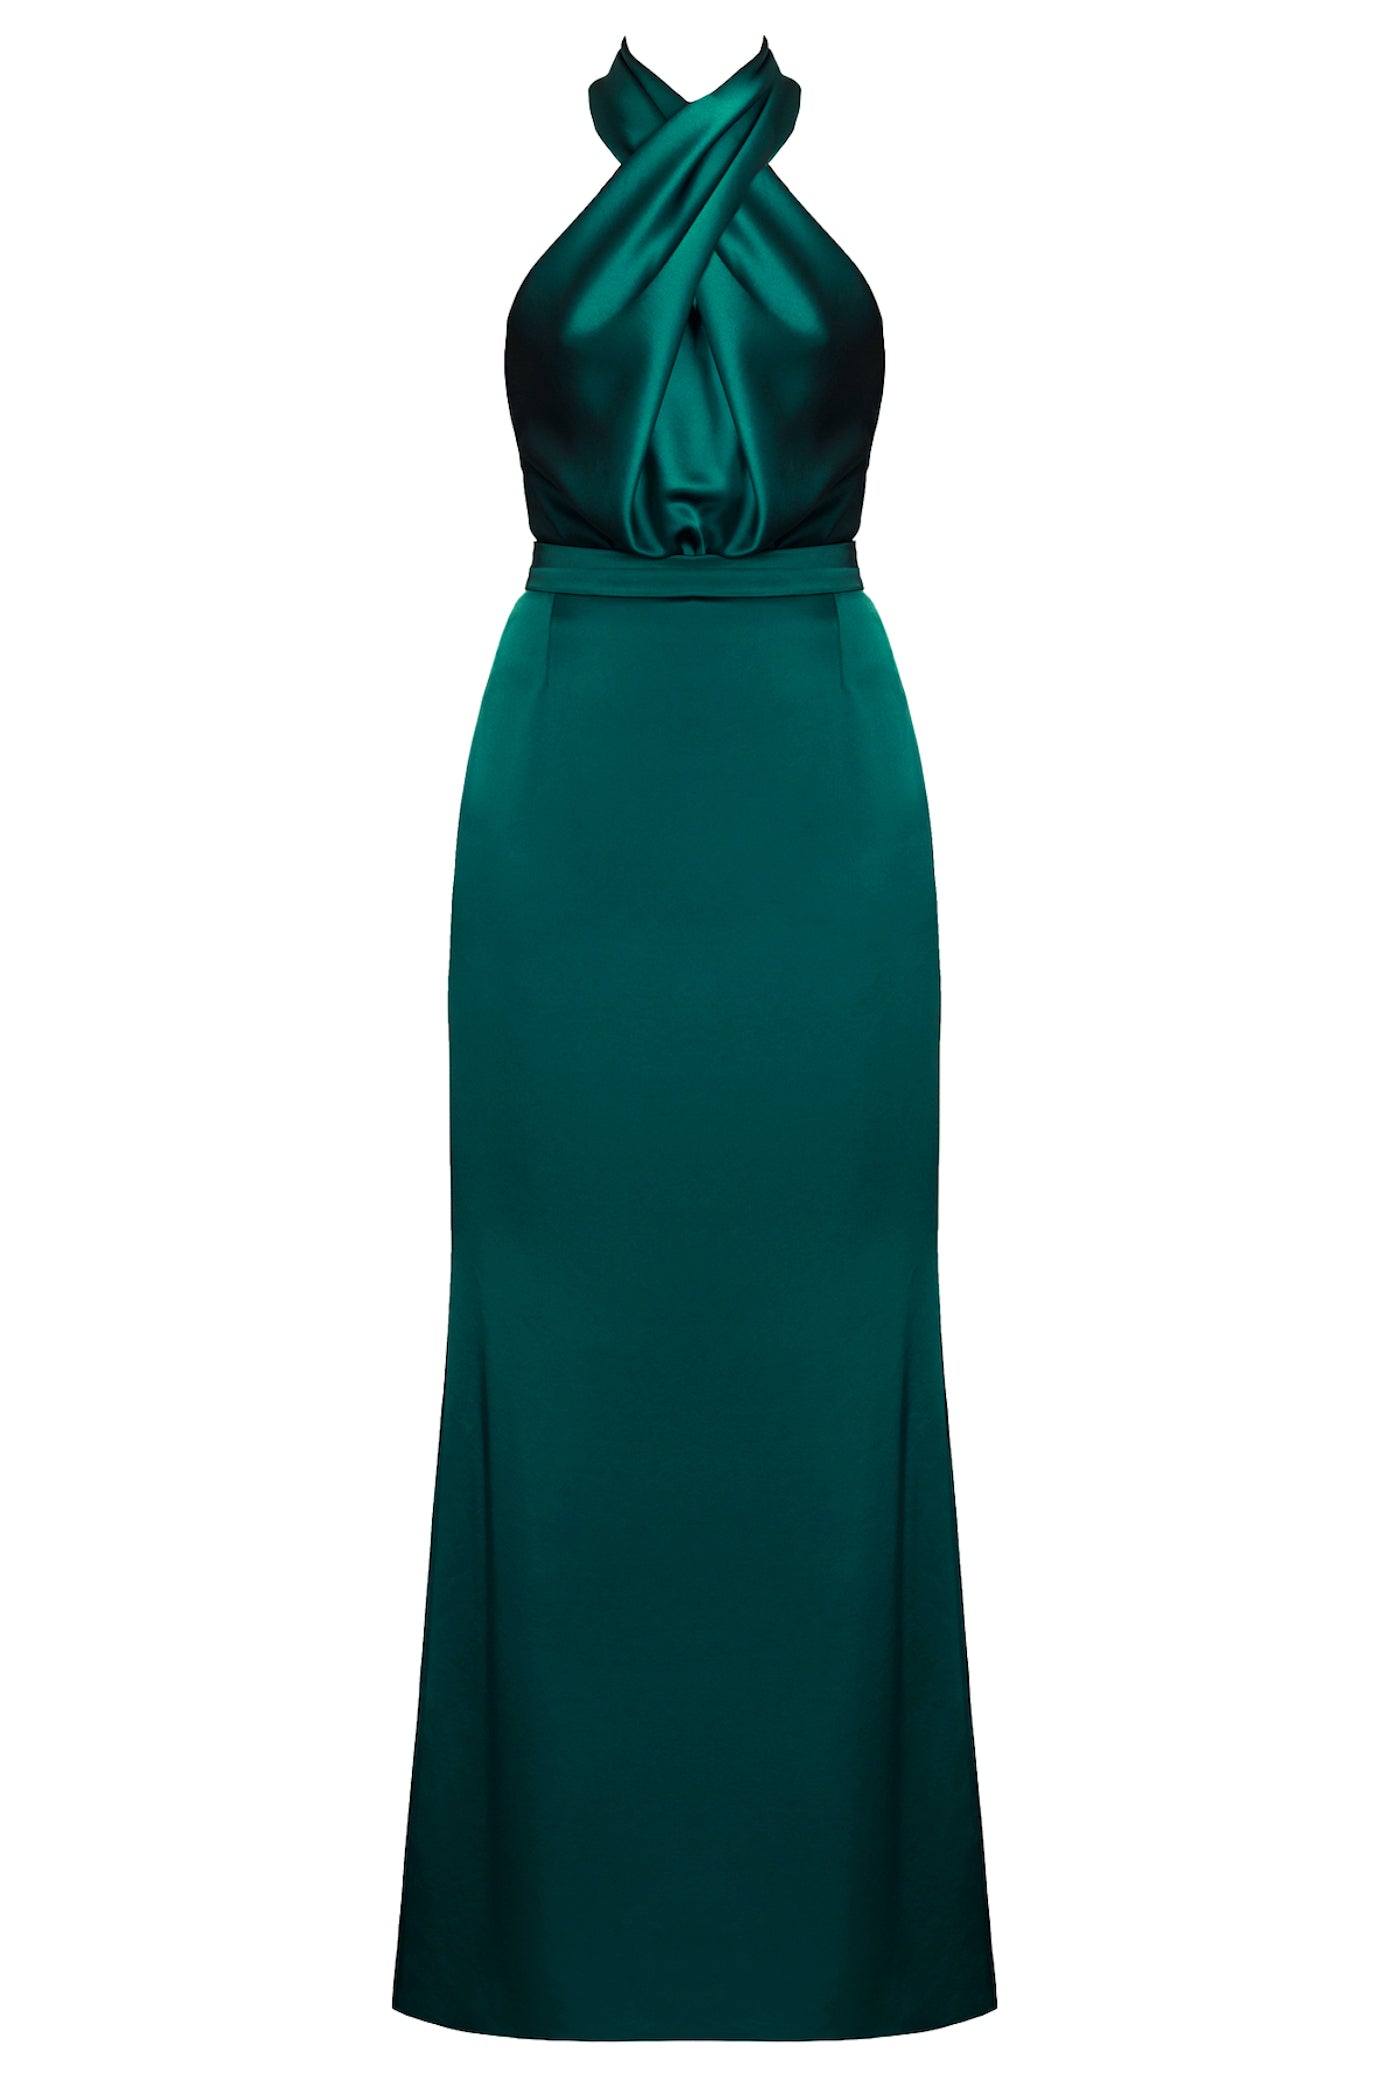 Formal Green Maxi Dress